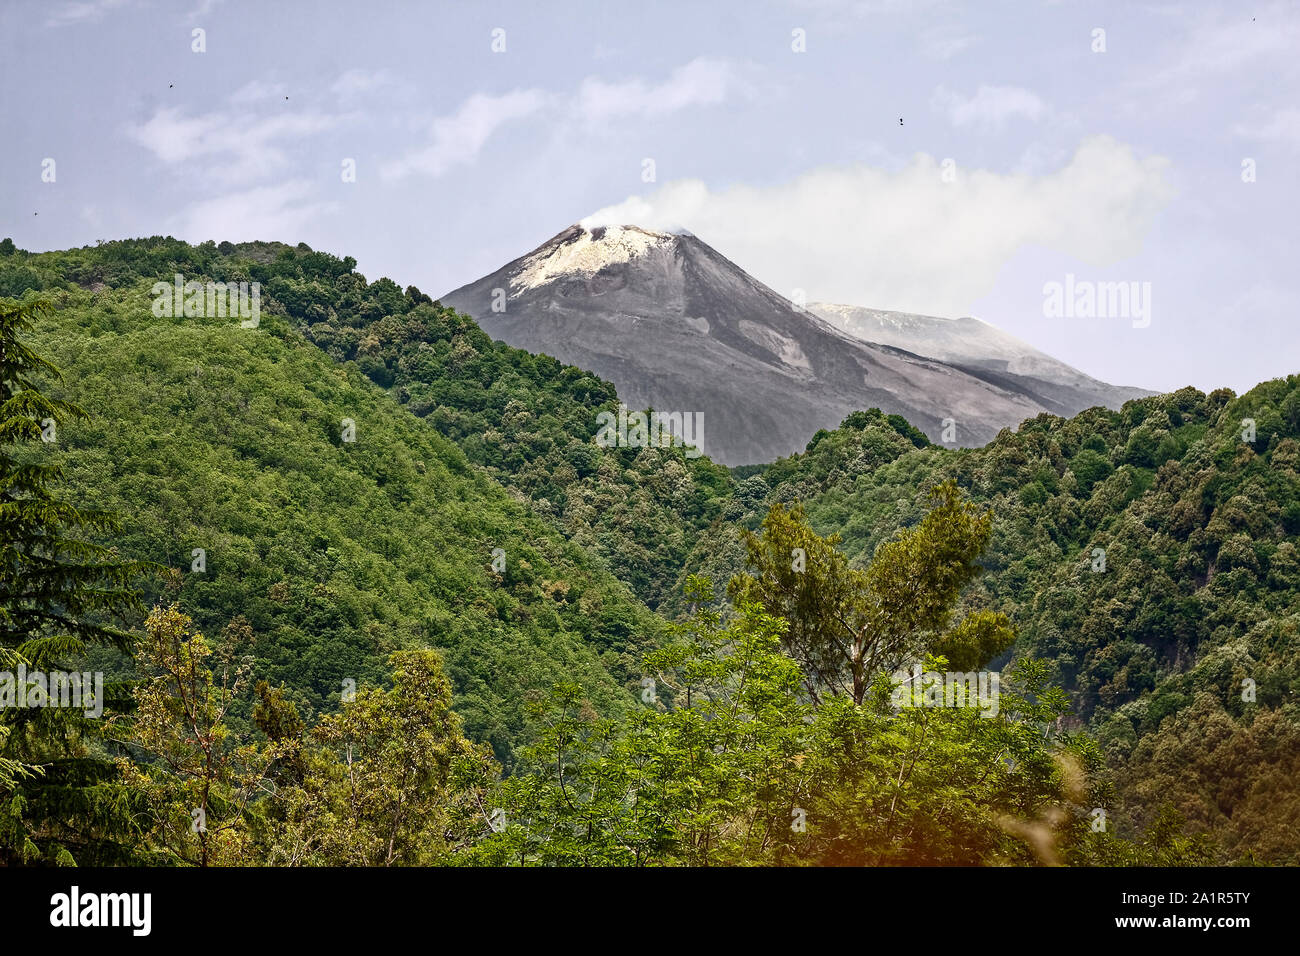 Mount Etna; Europe's largest active volcano; nature, steam erupting, lava, destruction, devastation, green vegetation, Catania; Sicily; Italy; summer; Stock Photo